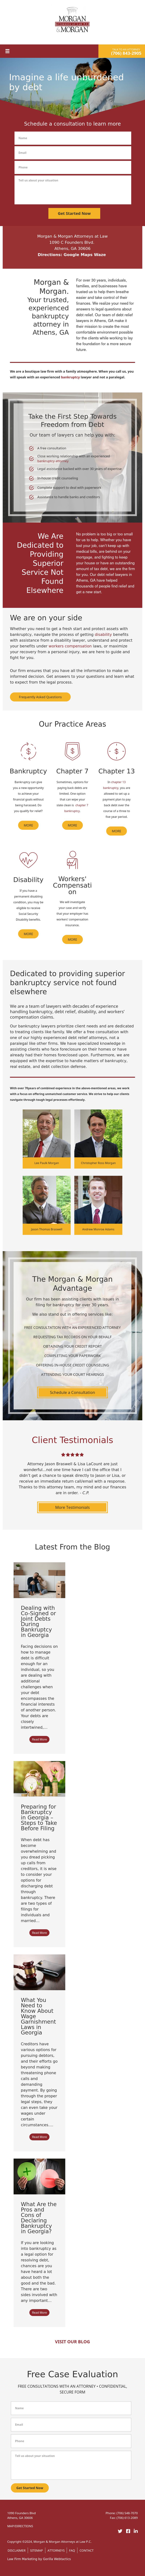 Morgan & Morgan - Athens GA Lawyers